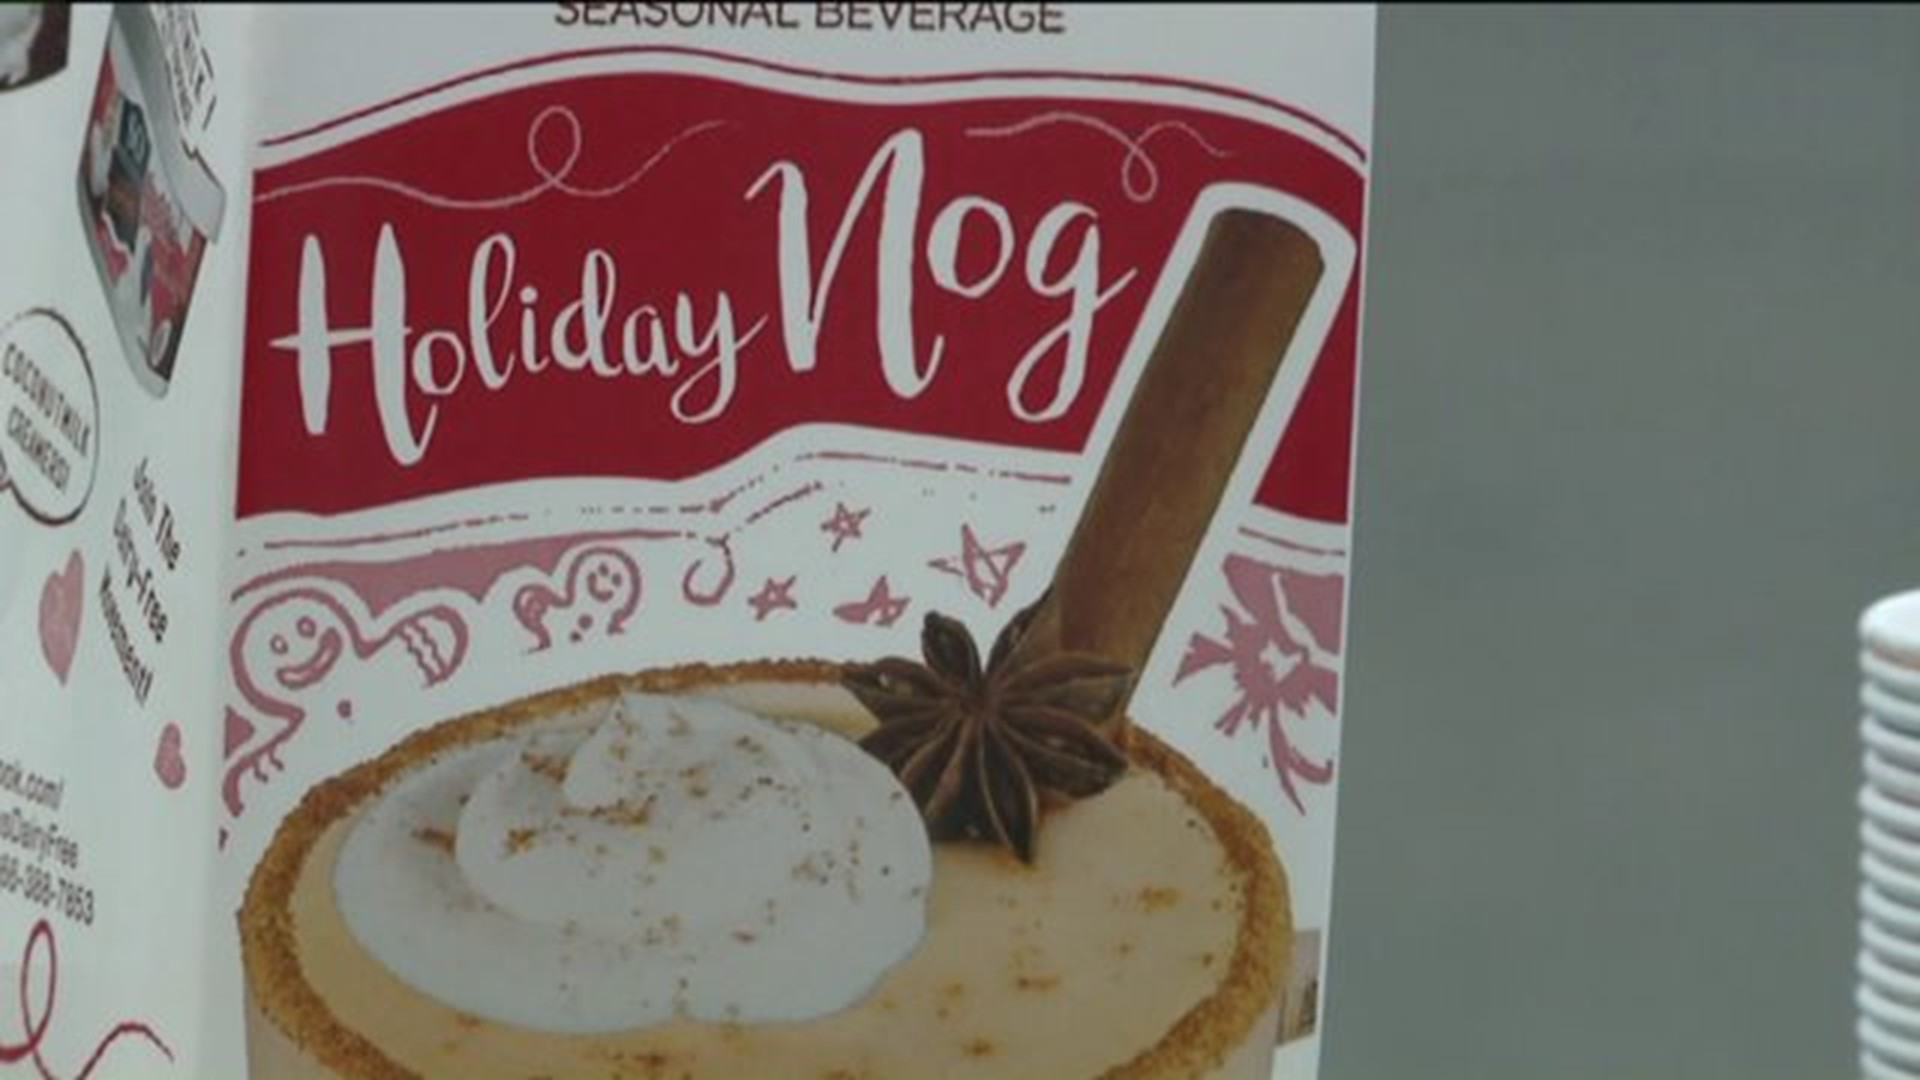 Taste Test: So Delicious Holiday Nog, Dairy-free Eggnog